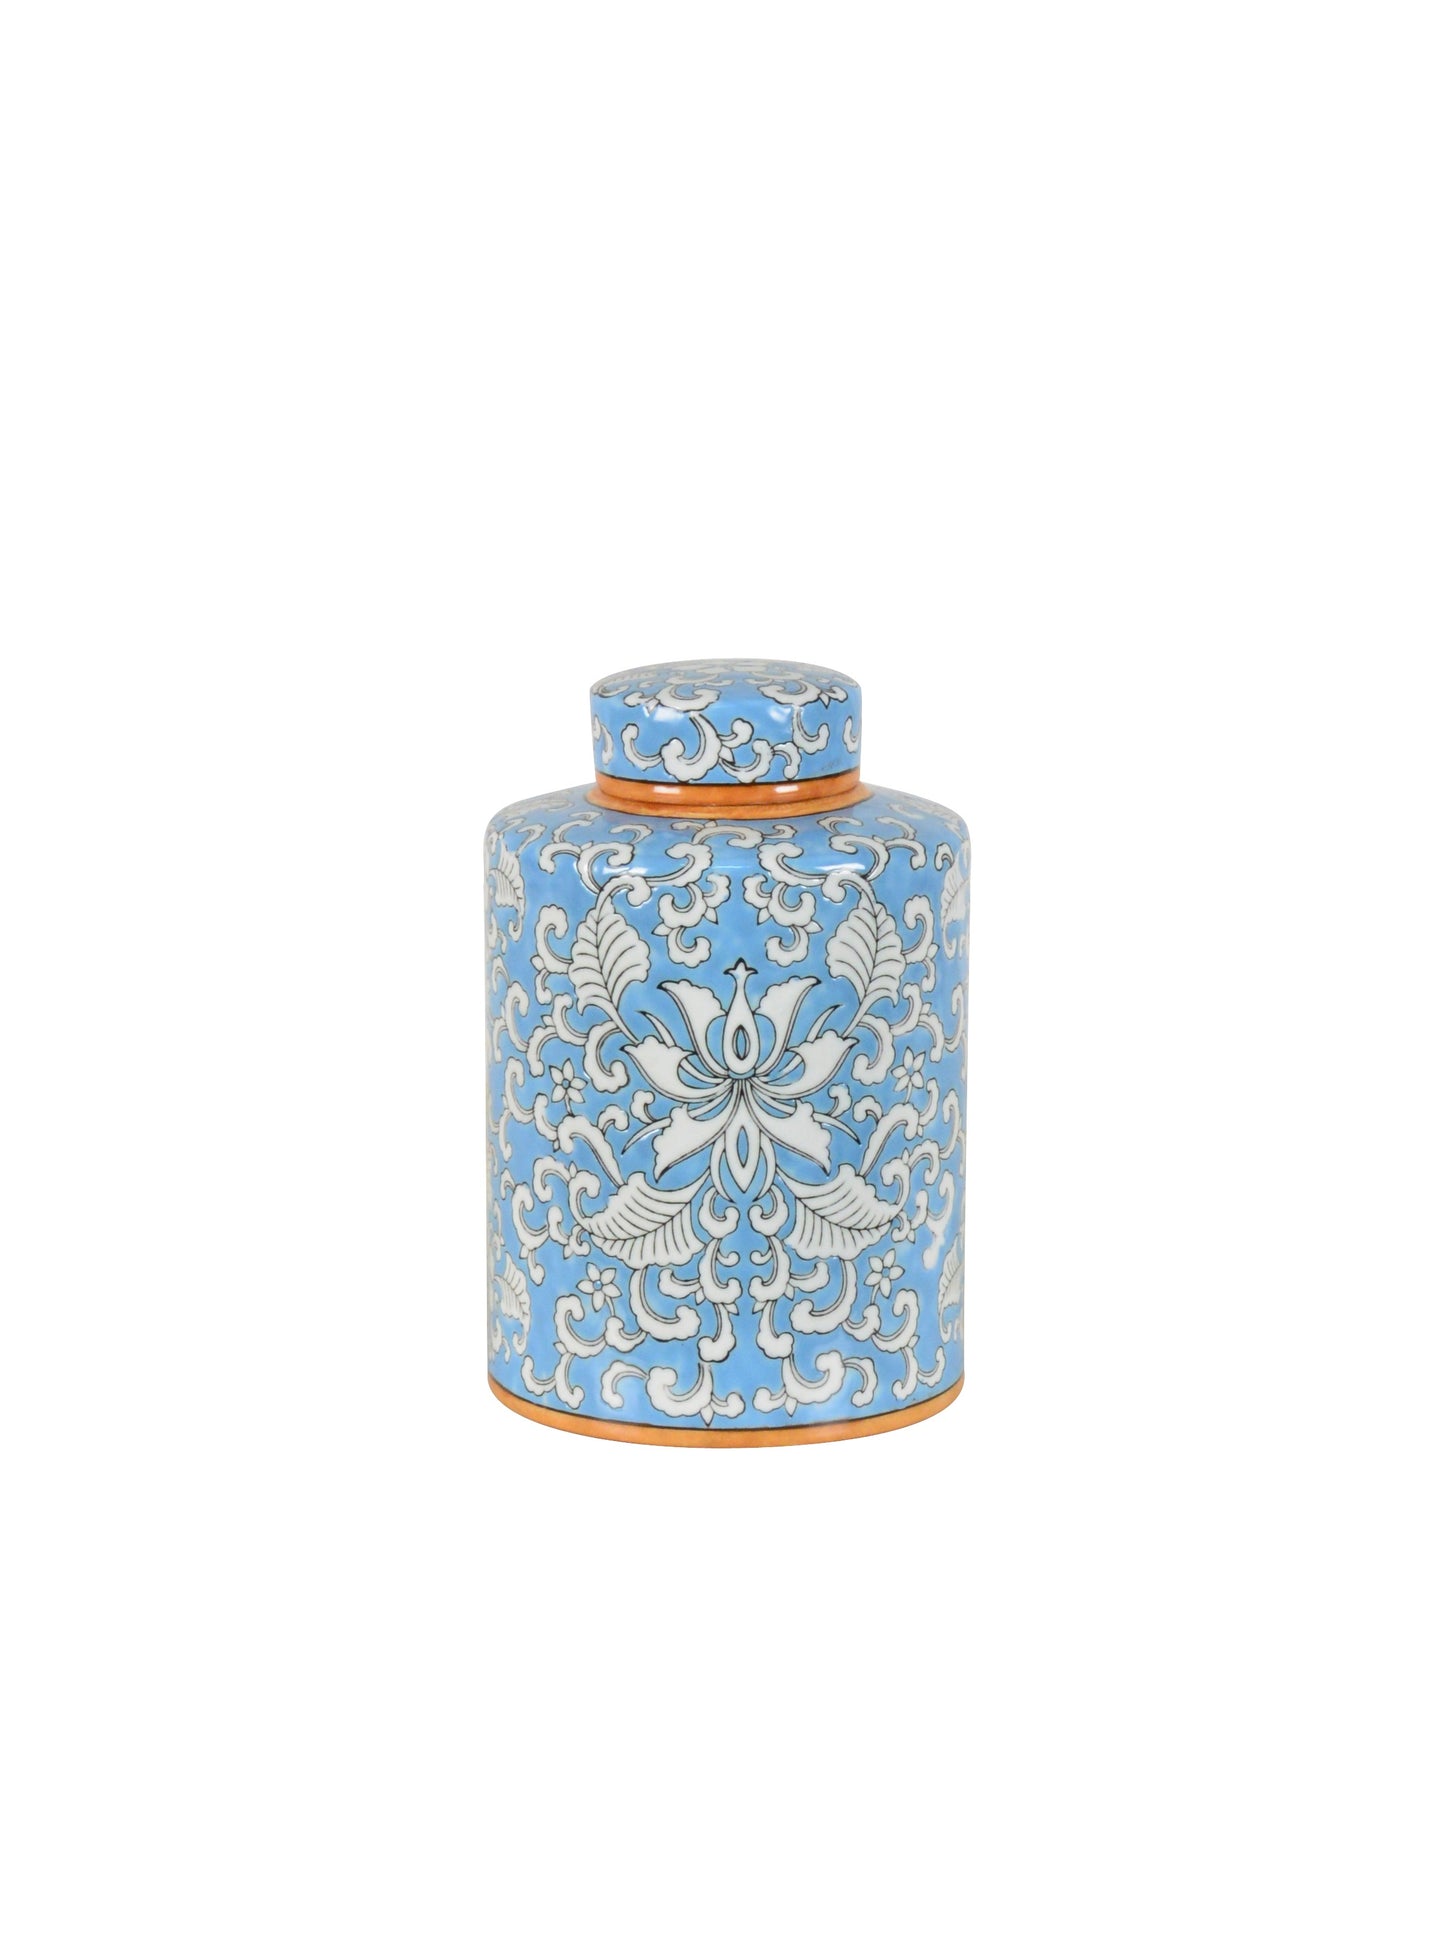 Coral Blue and White Ceramic Mini Jar - 18cm